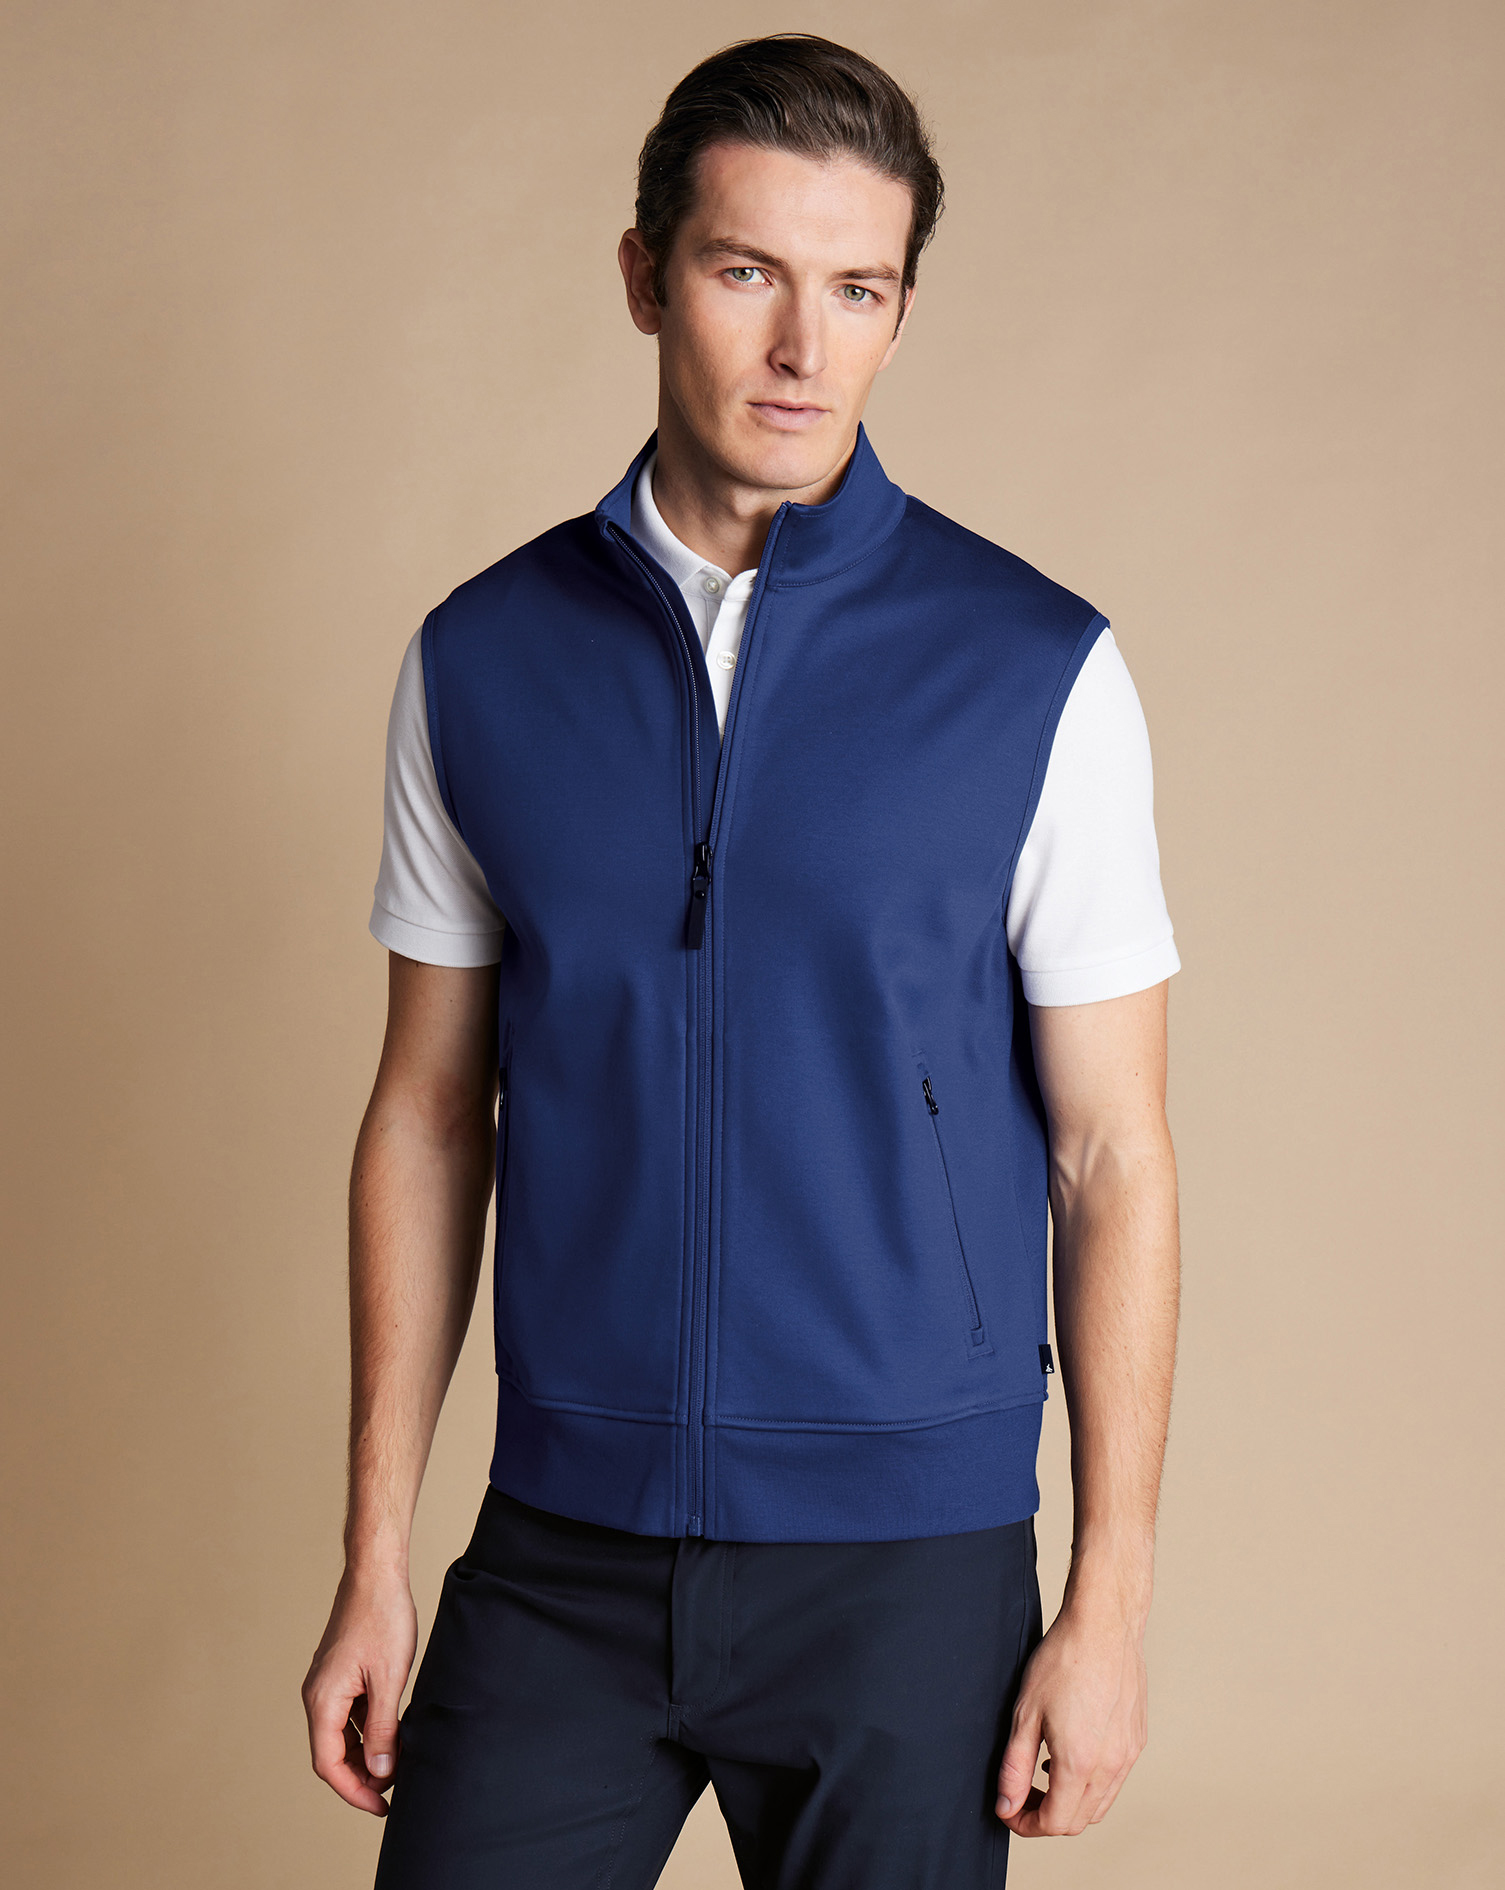 Men's Charles Tyrwhitt Performance Funnel Neck Gilet - Royal Blue Sleeveless Jacket Size XL Cotton
